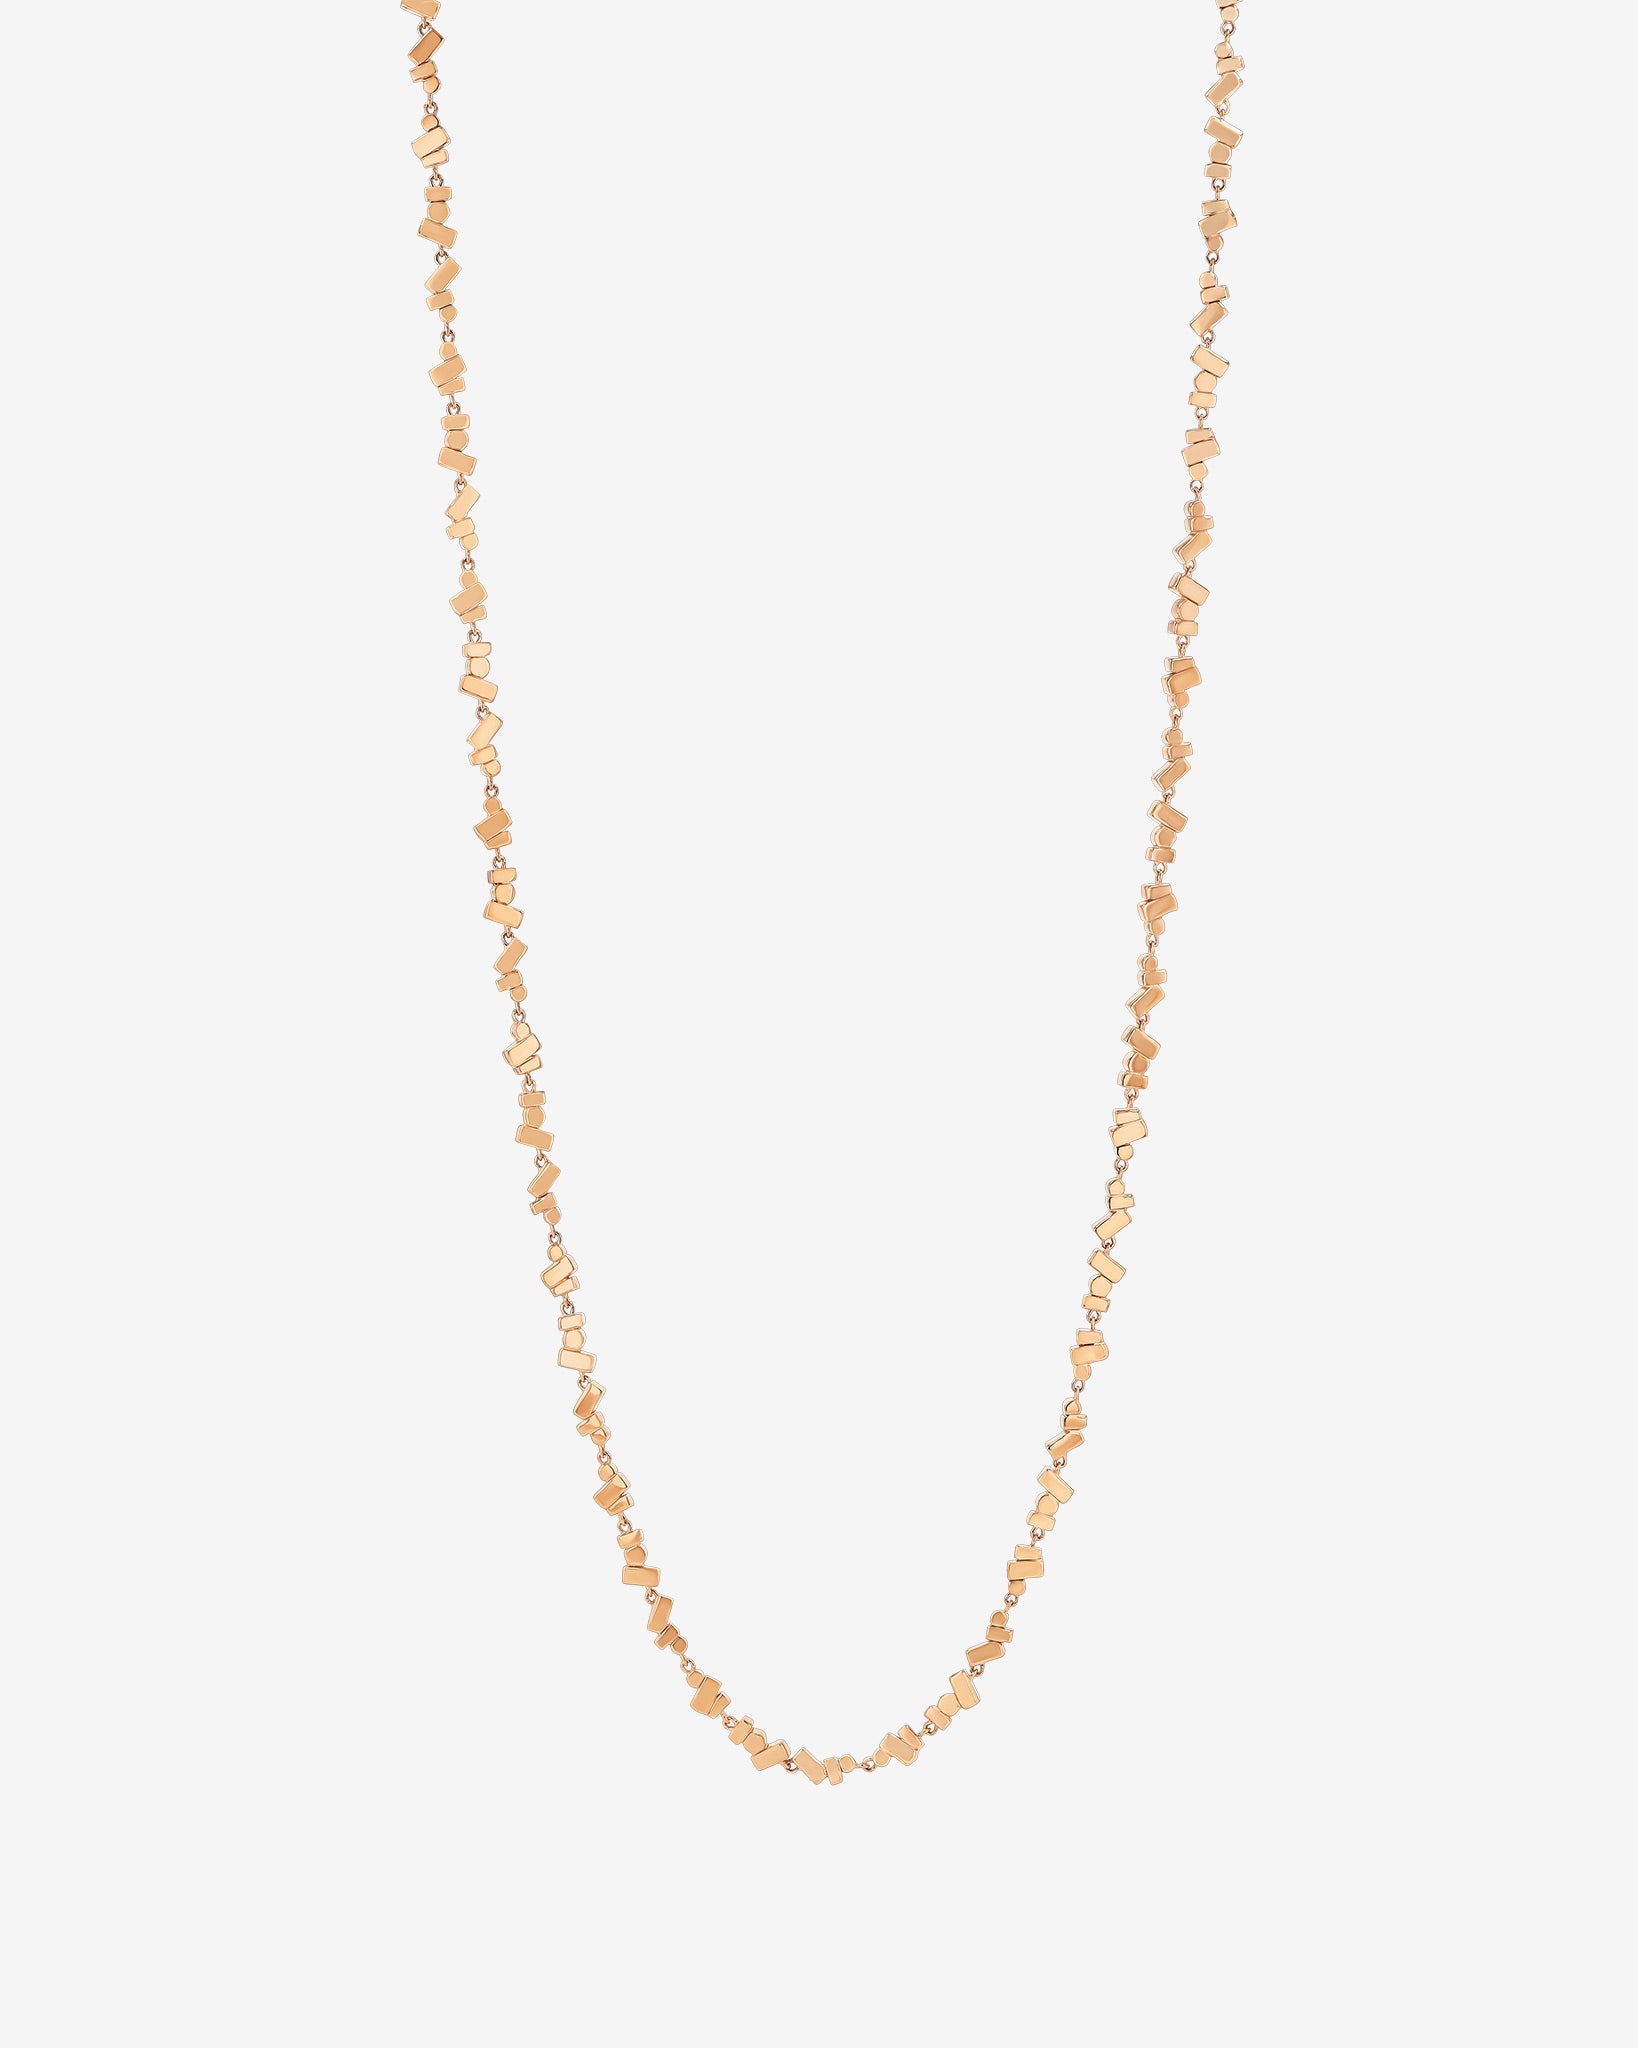 Suzanne Kalan Golden Cluster 36" Inch Tennis Necklace in 18k rose gold